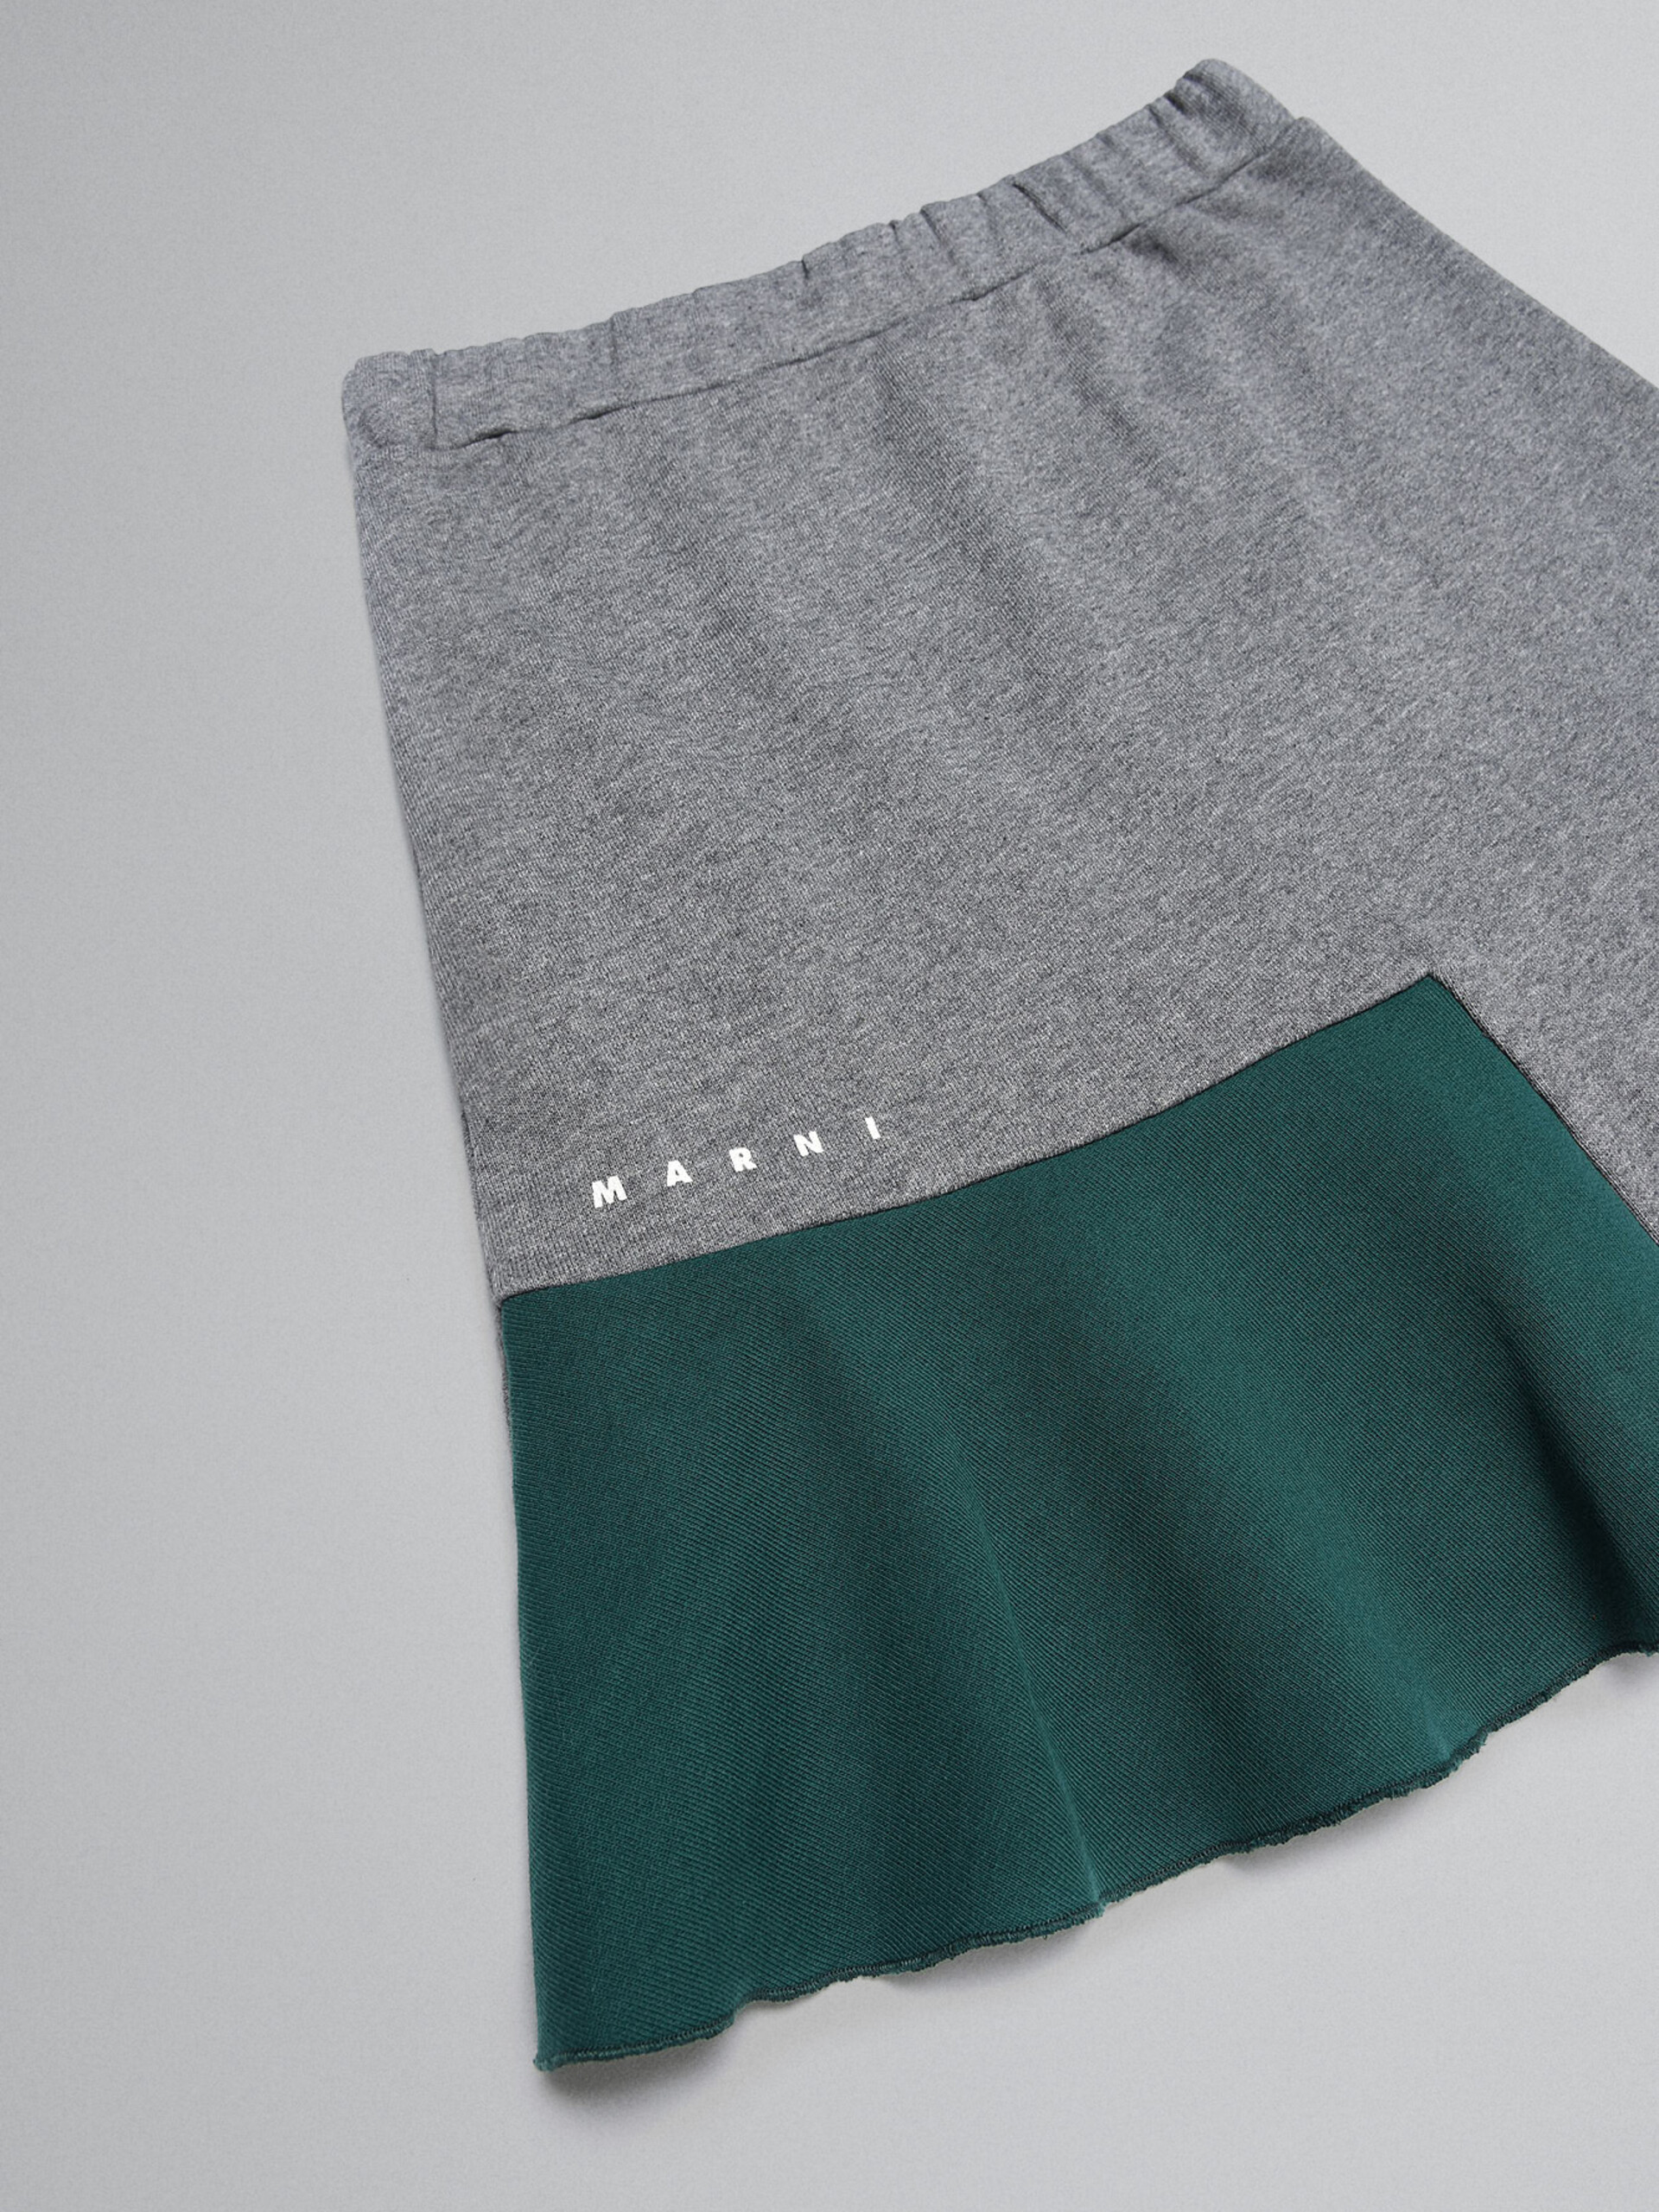 Grey melange skirt with asymmetric flounce hem - Skirts - Image 3